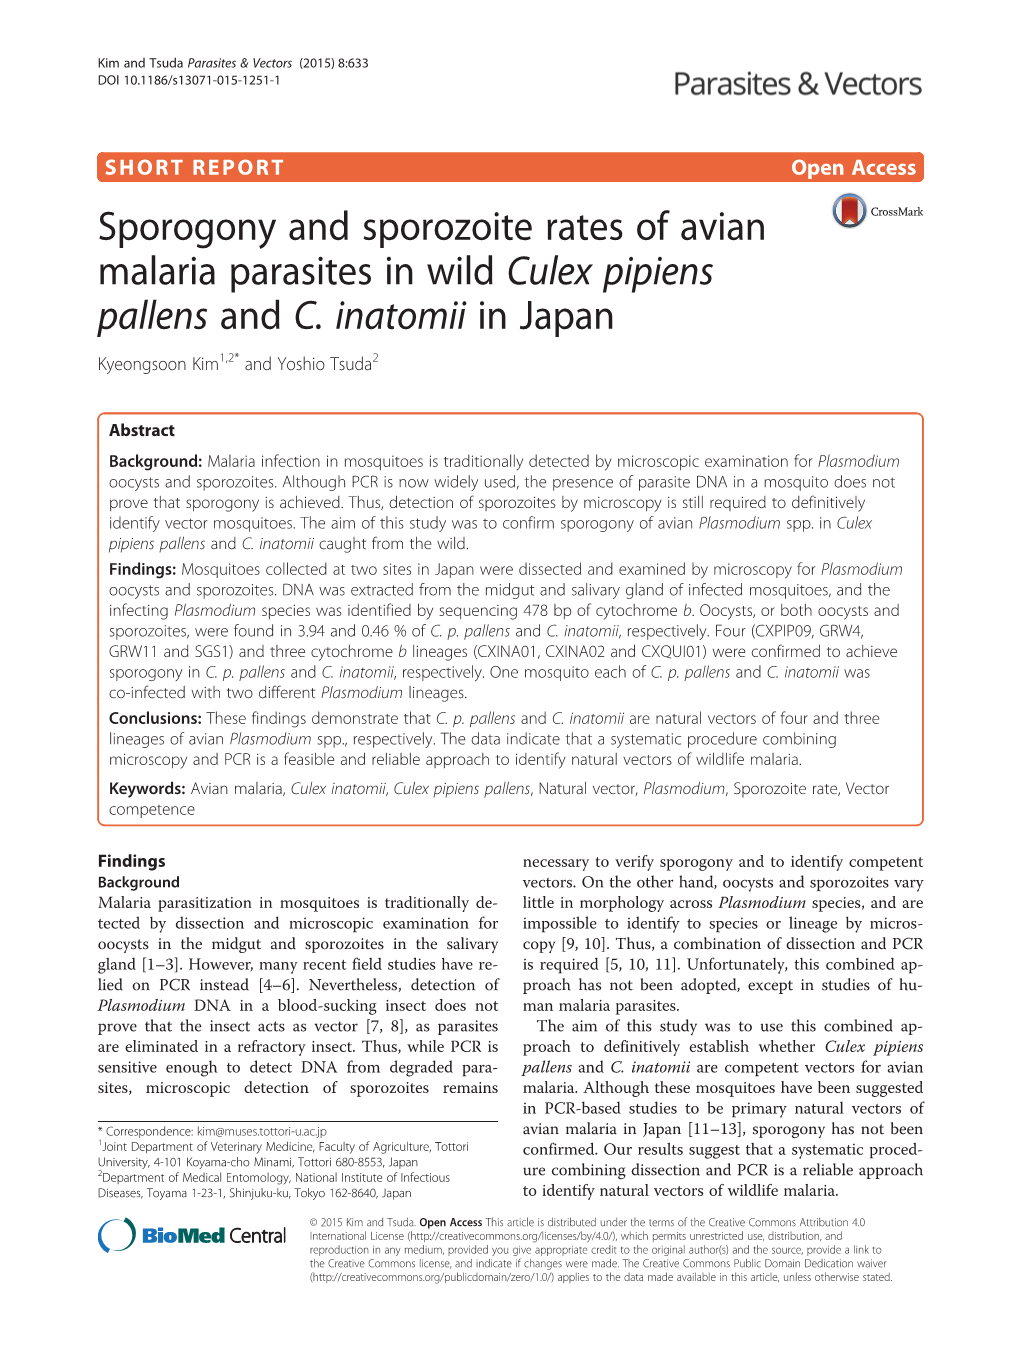 Sporogony and Sporozoite Rates of Avian Malaria Parasites in Wild Culex Pipiens Pallens and C